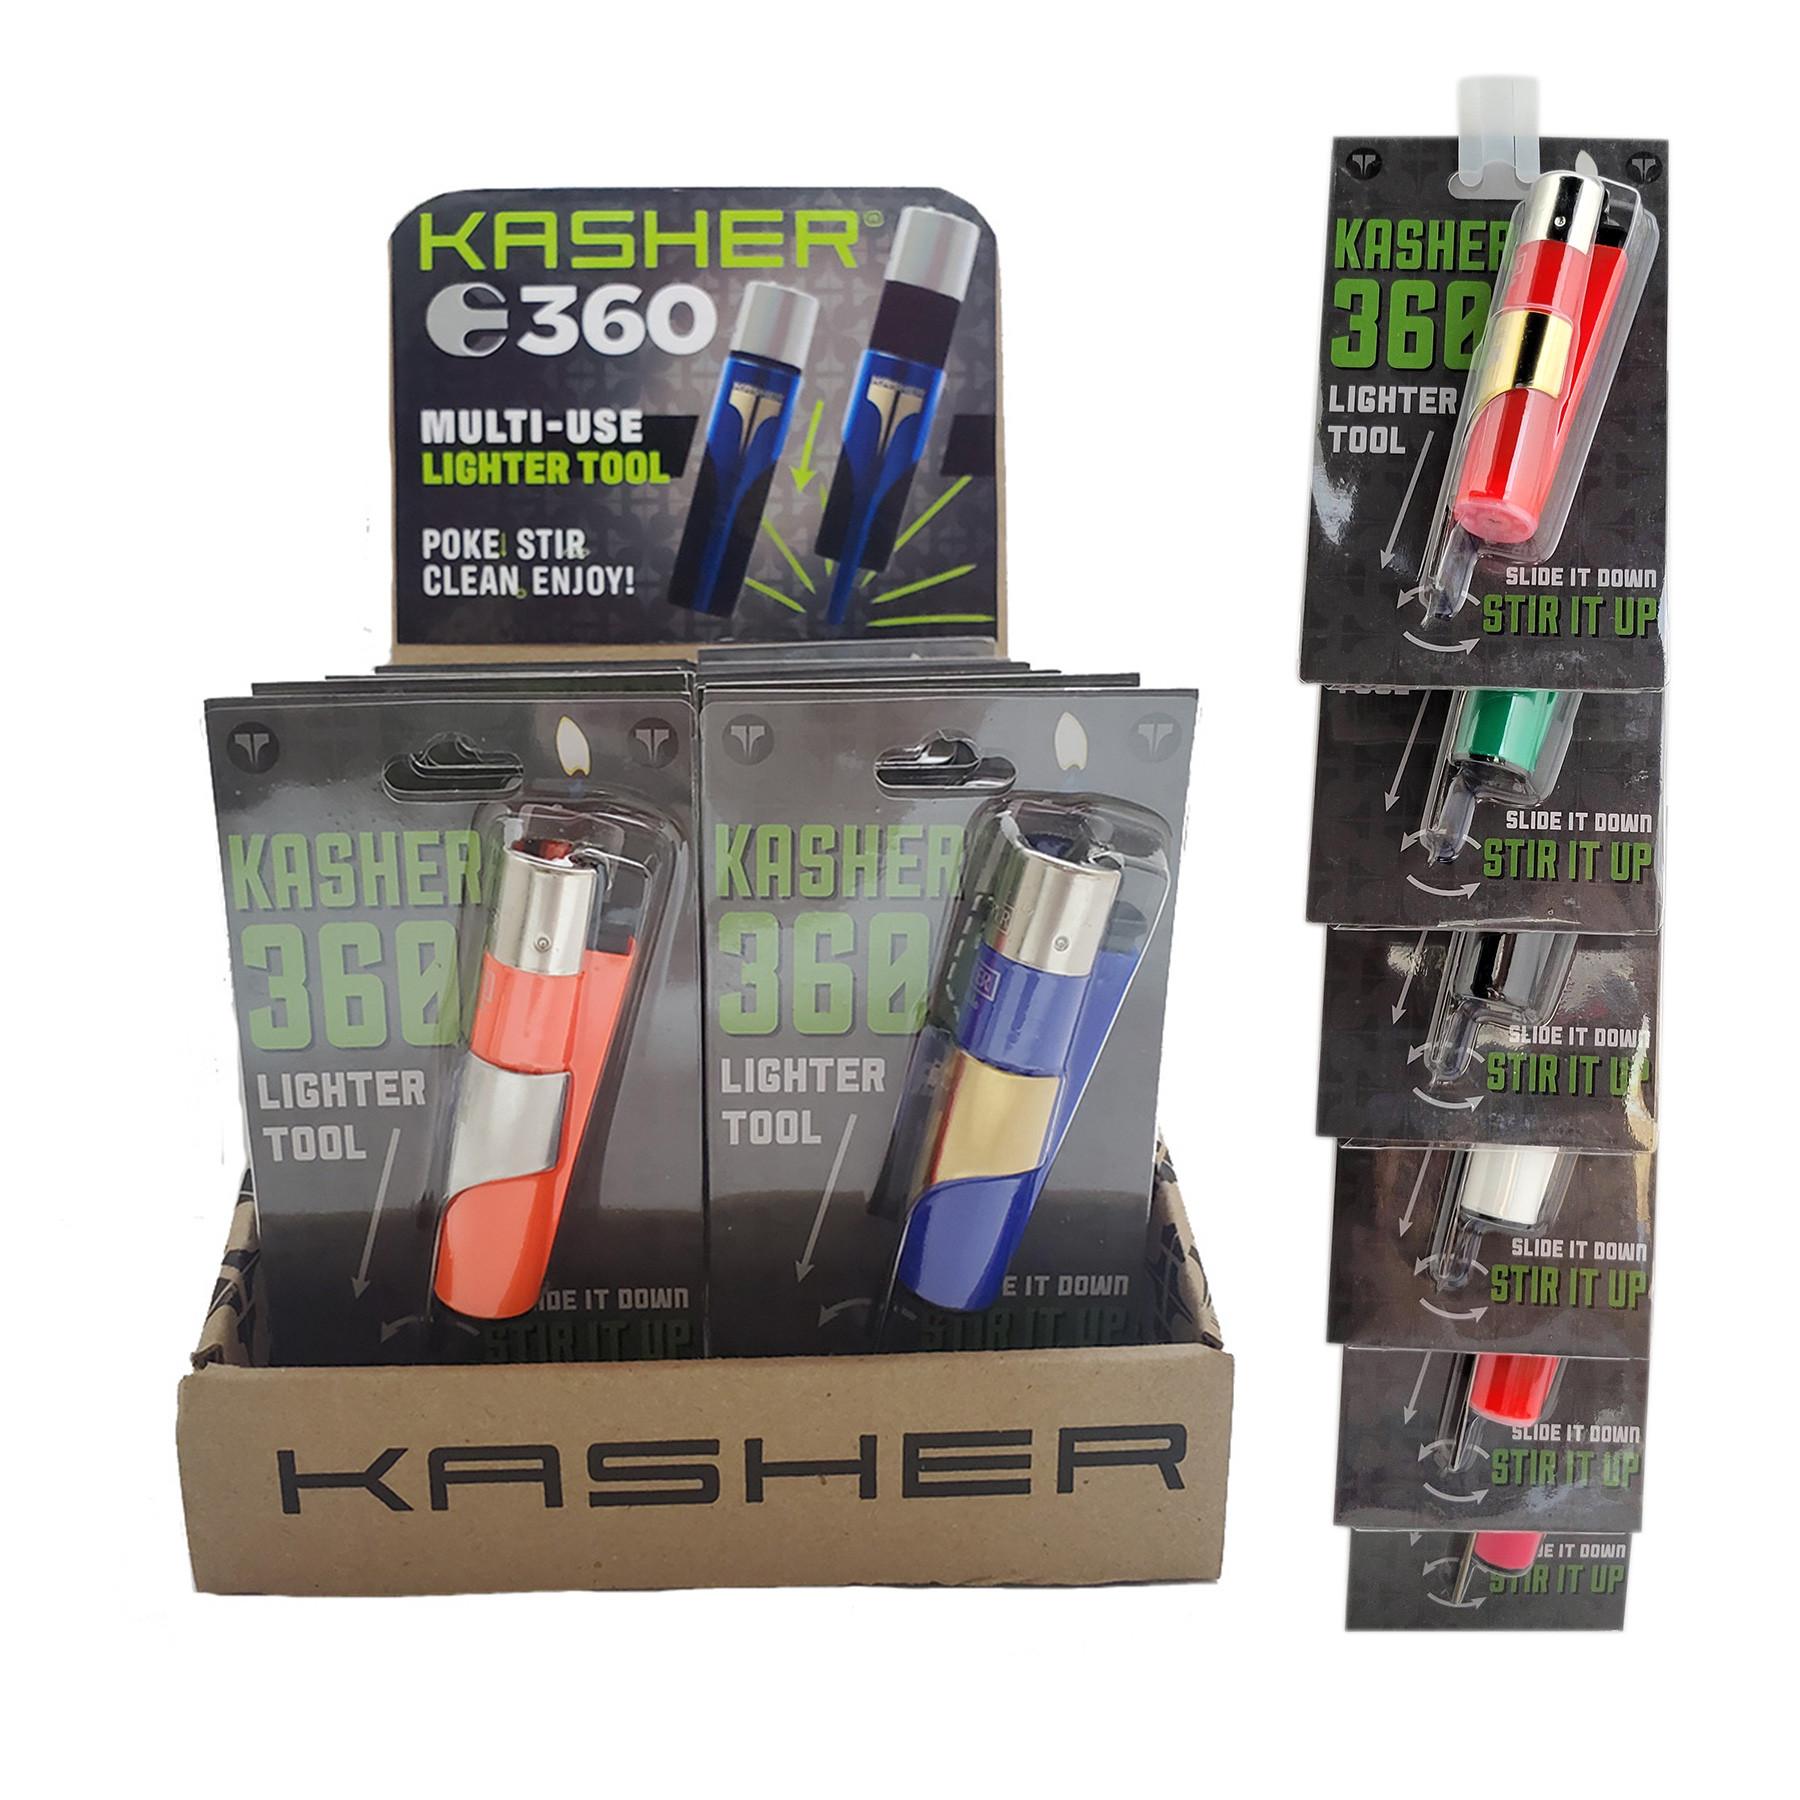 Kasher 360 W/Lighter (Display of 12 + Clip Strip of 6)